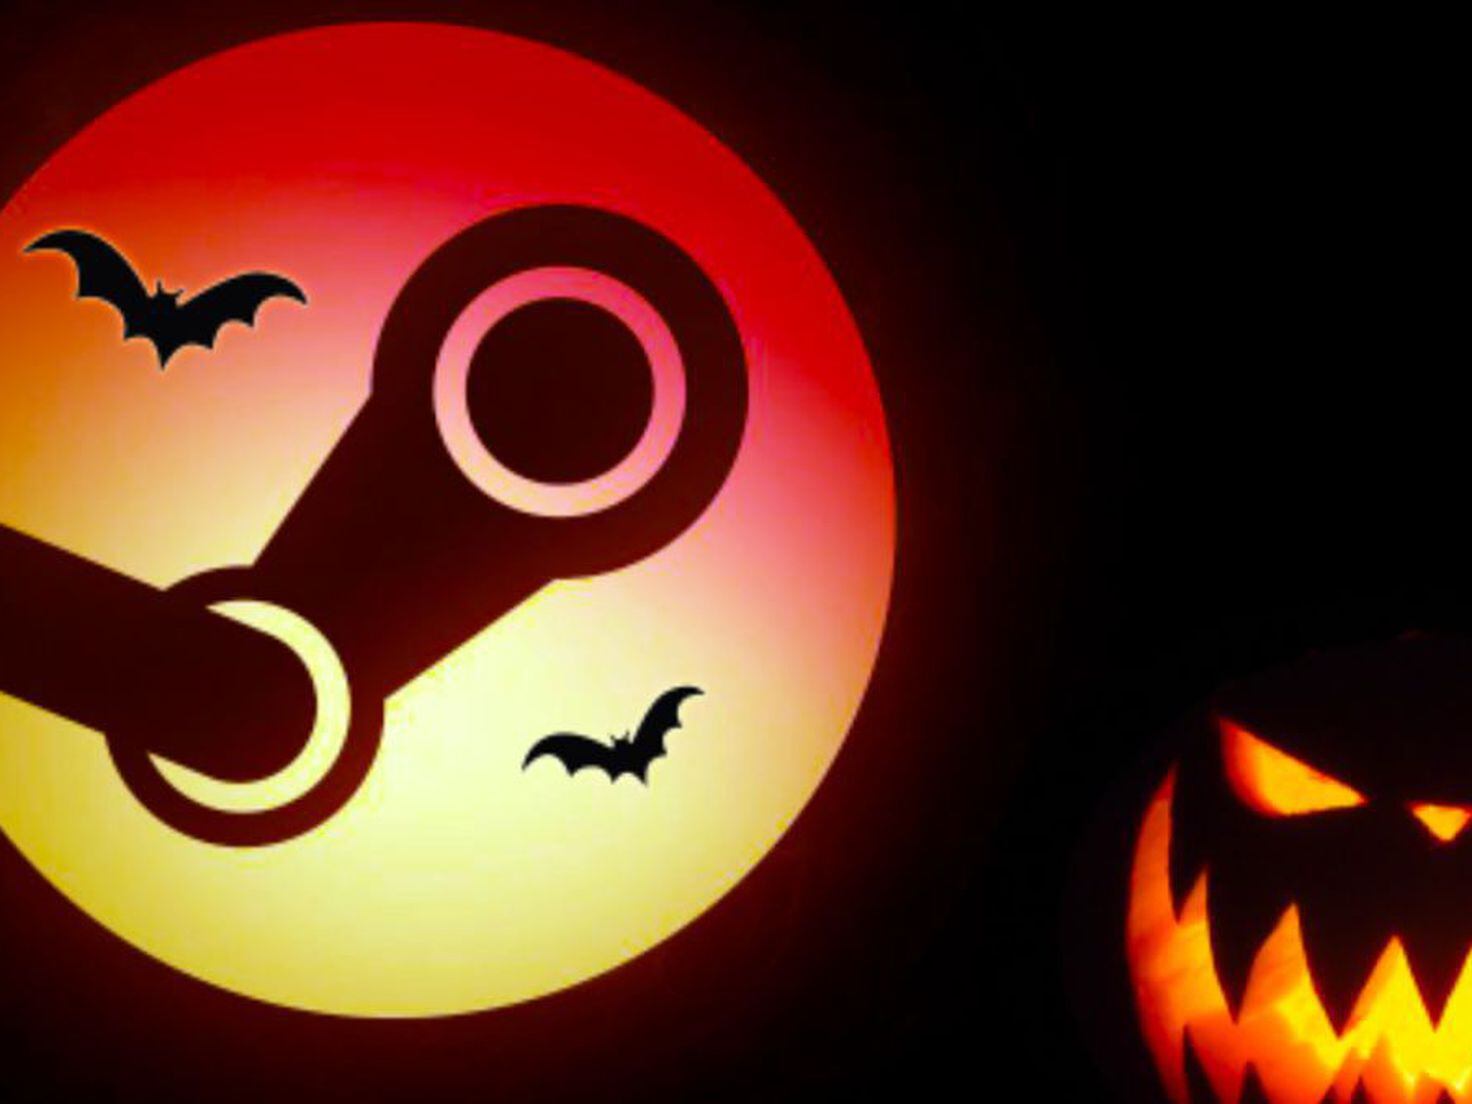 Steam 2022 Halloween sale is here! Halloween sale runs from